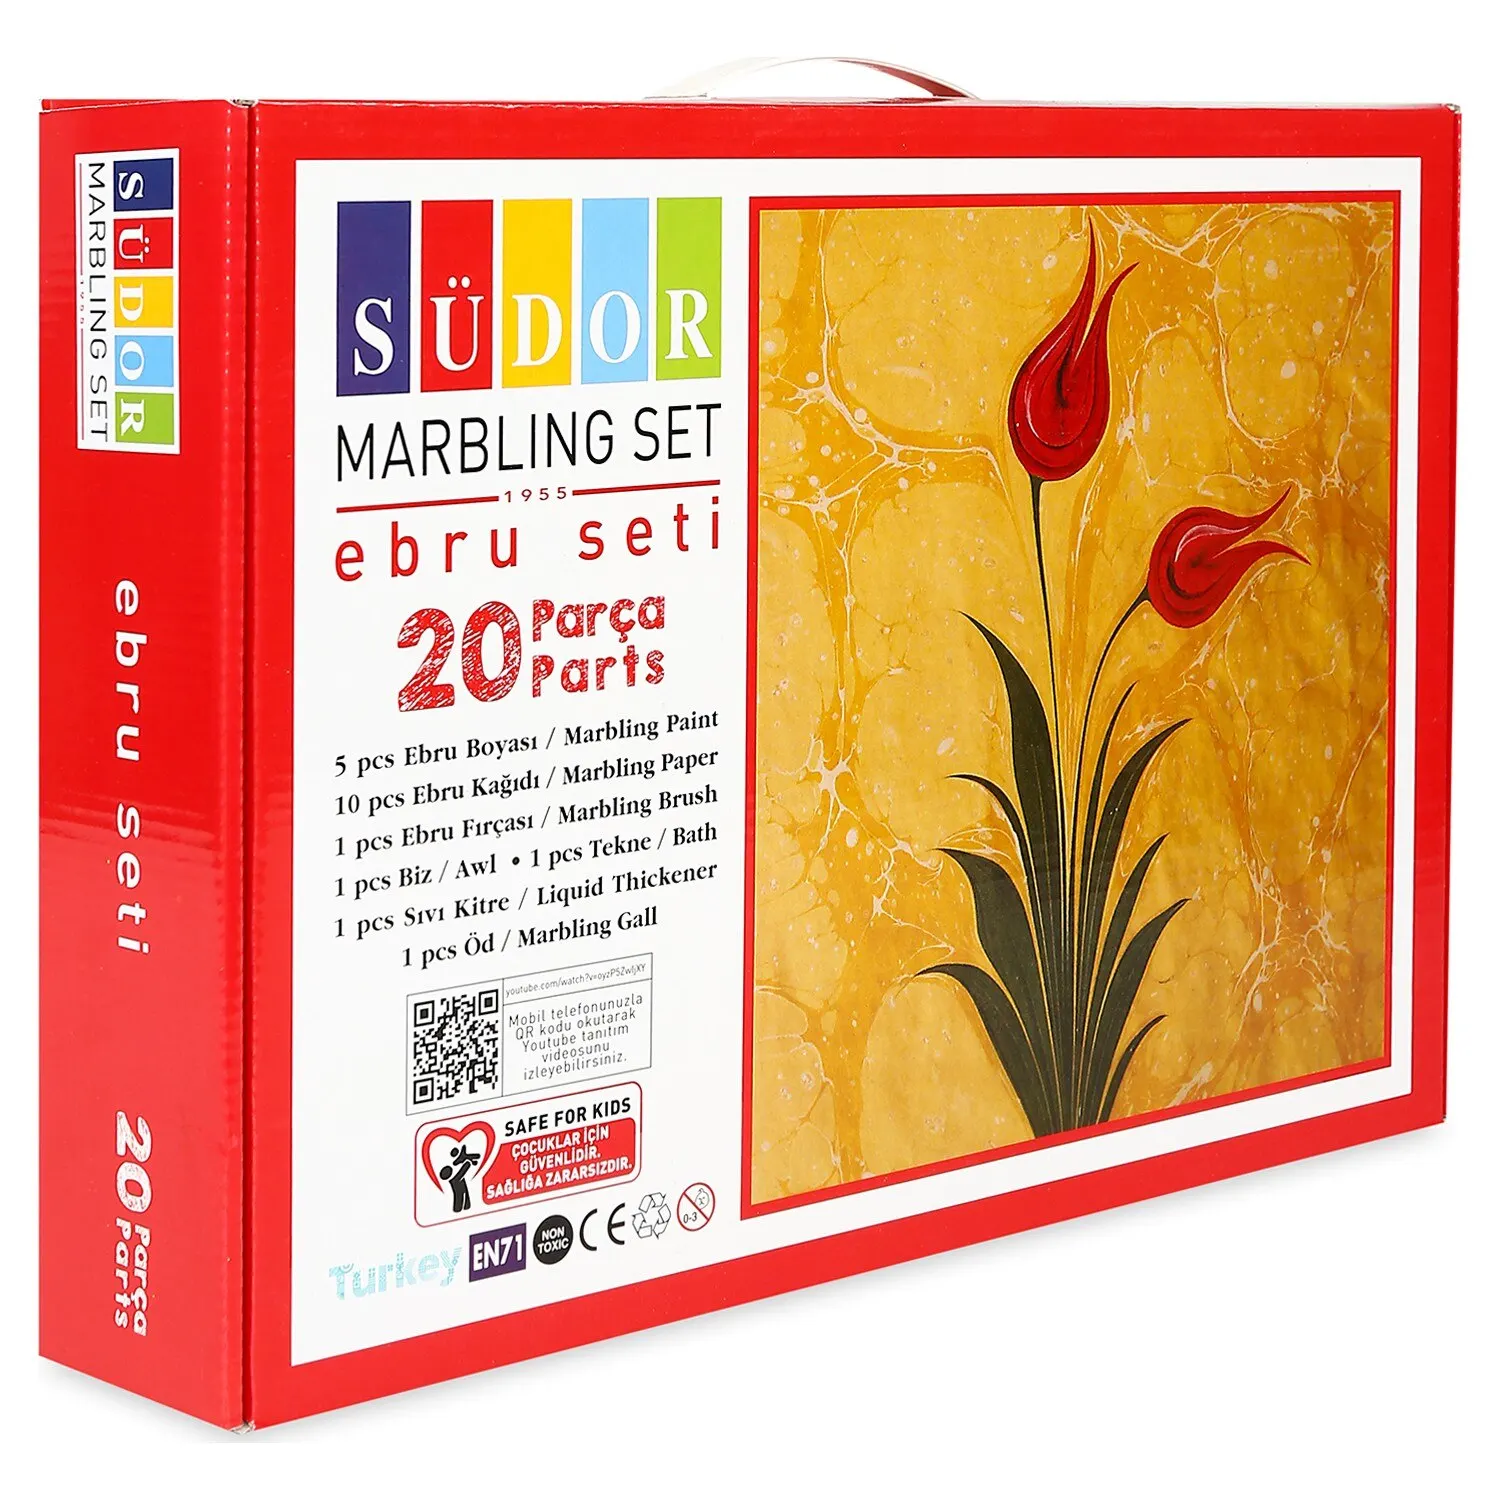 Turkish Marbling Paint Kit Art Set Hobby A4 Size 10 Pcs Paper 1 Brush, Awl, Bath, Liquid Thickener, Gall